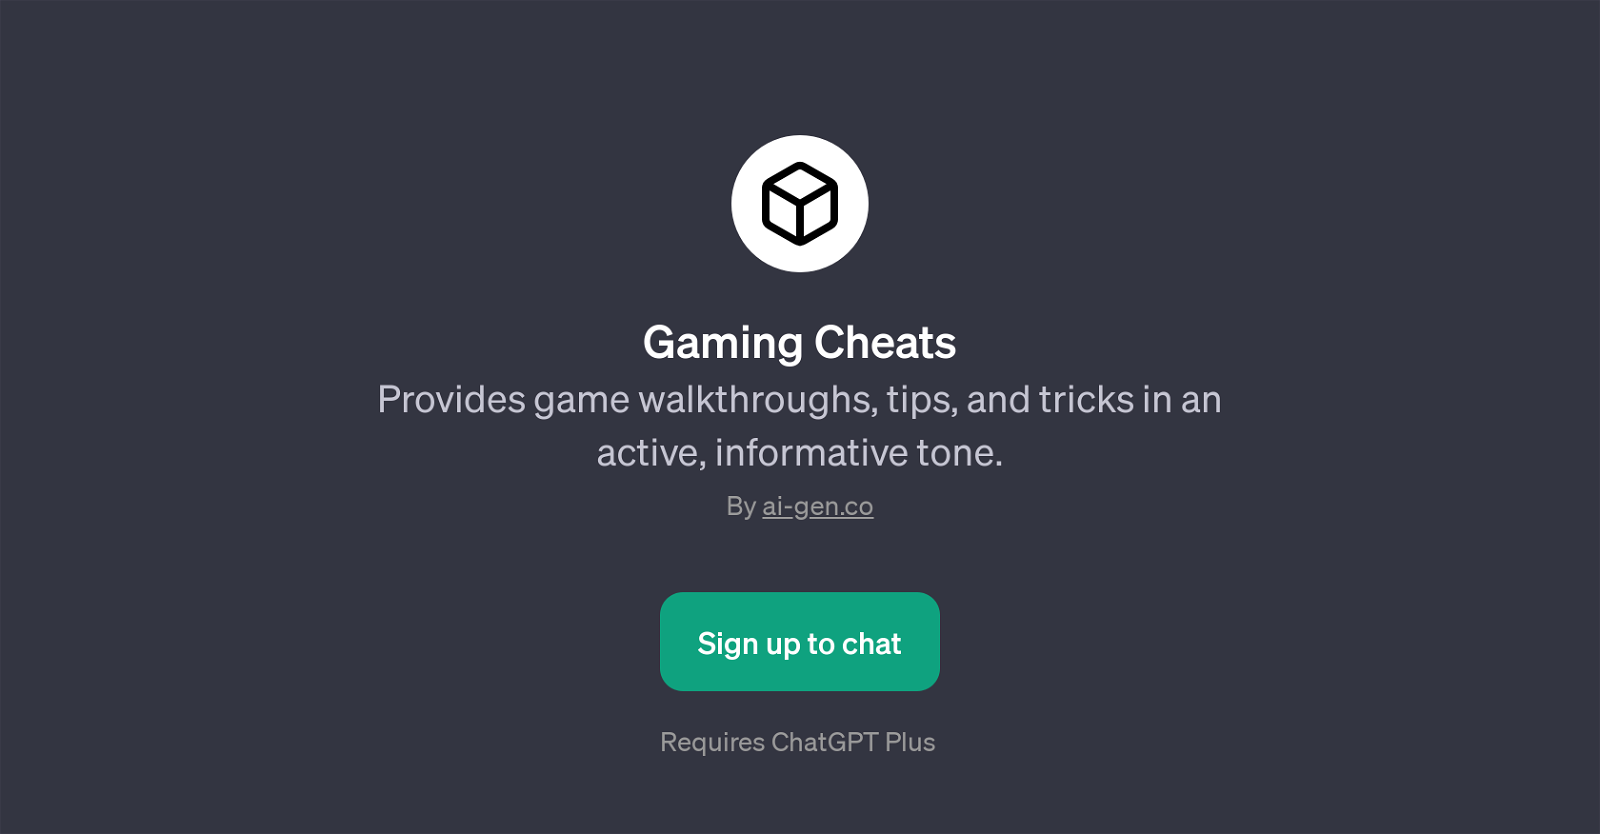 Gaming Cheats website